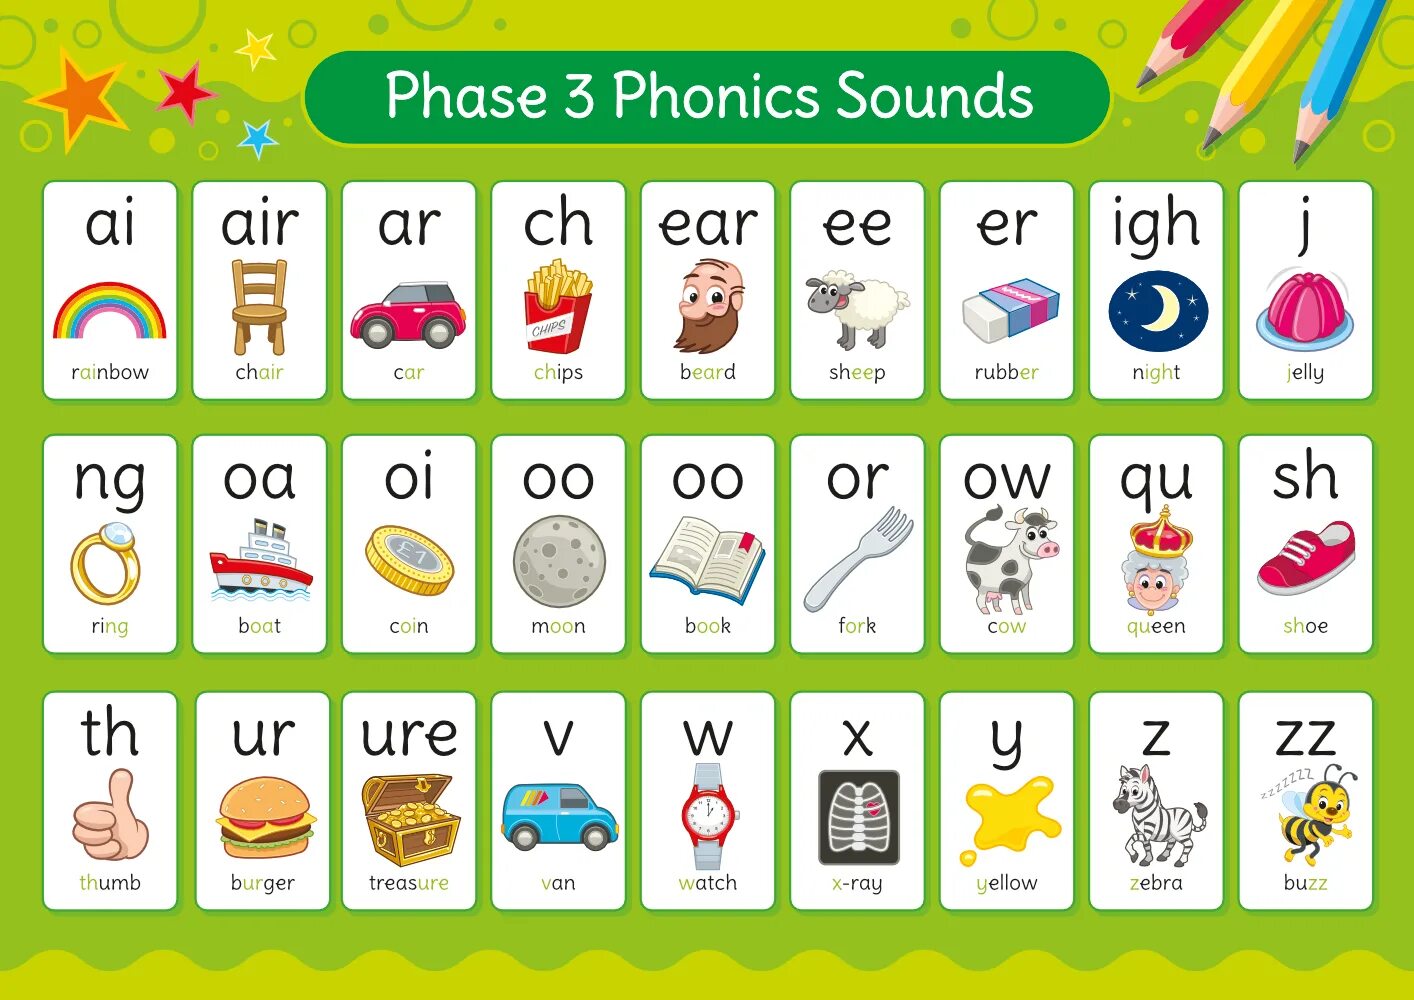 Phonics. Phase 3 Phonics. Phonic Sounds. Phase 2 Phonics Sounds. Share sounds